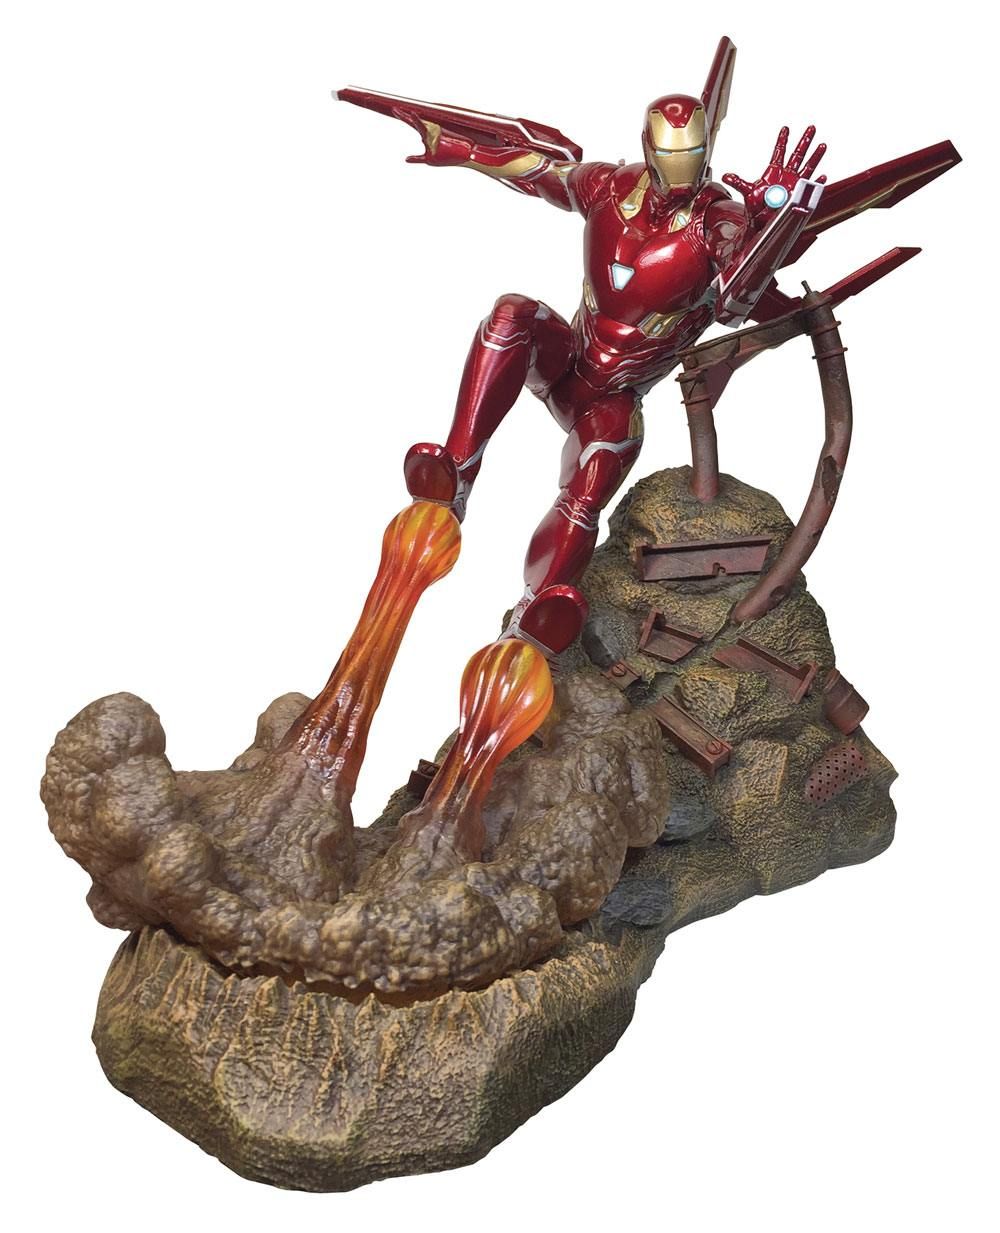 Avengers Infinity War Marvel Movie Premier Collection Statue Iron Man MK50 30 cm Diamond Select